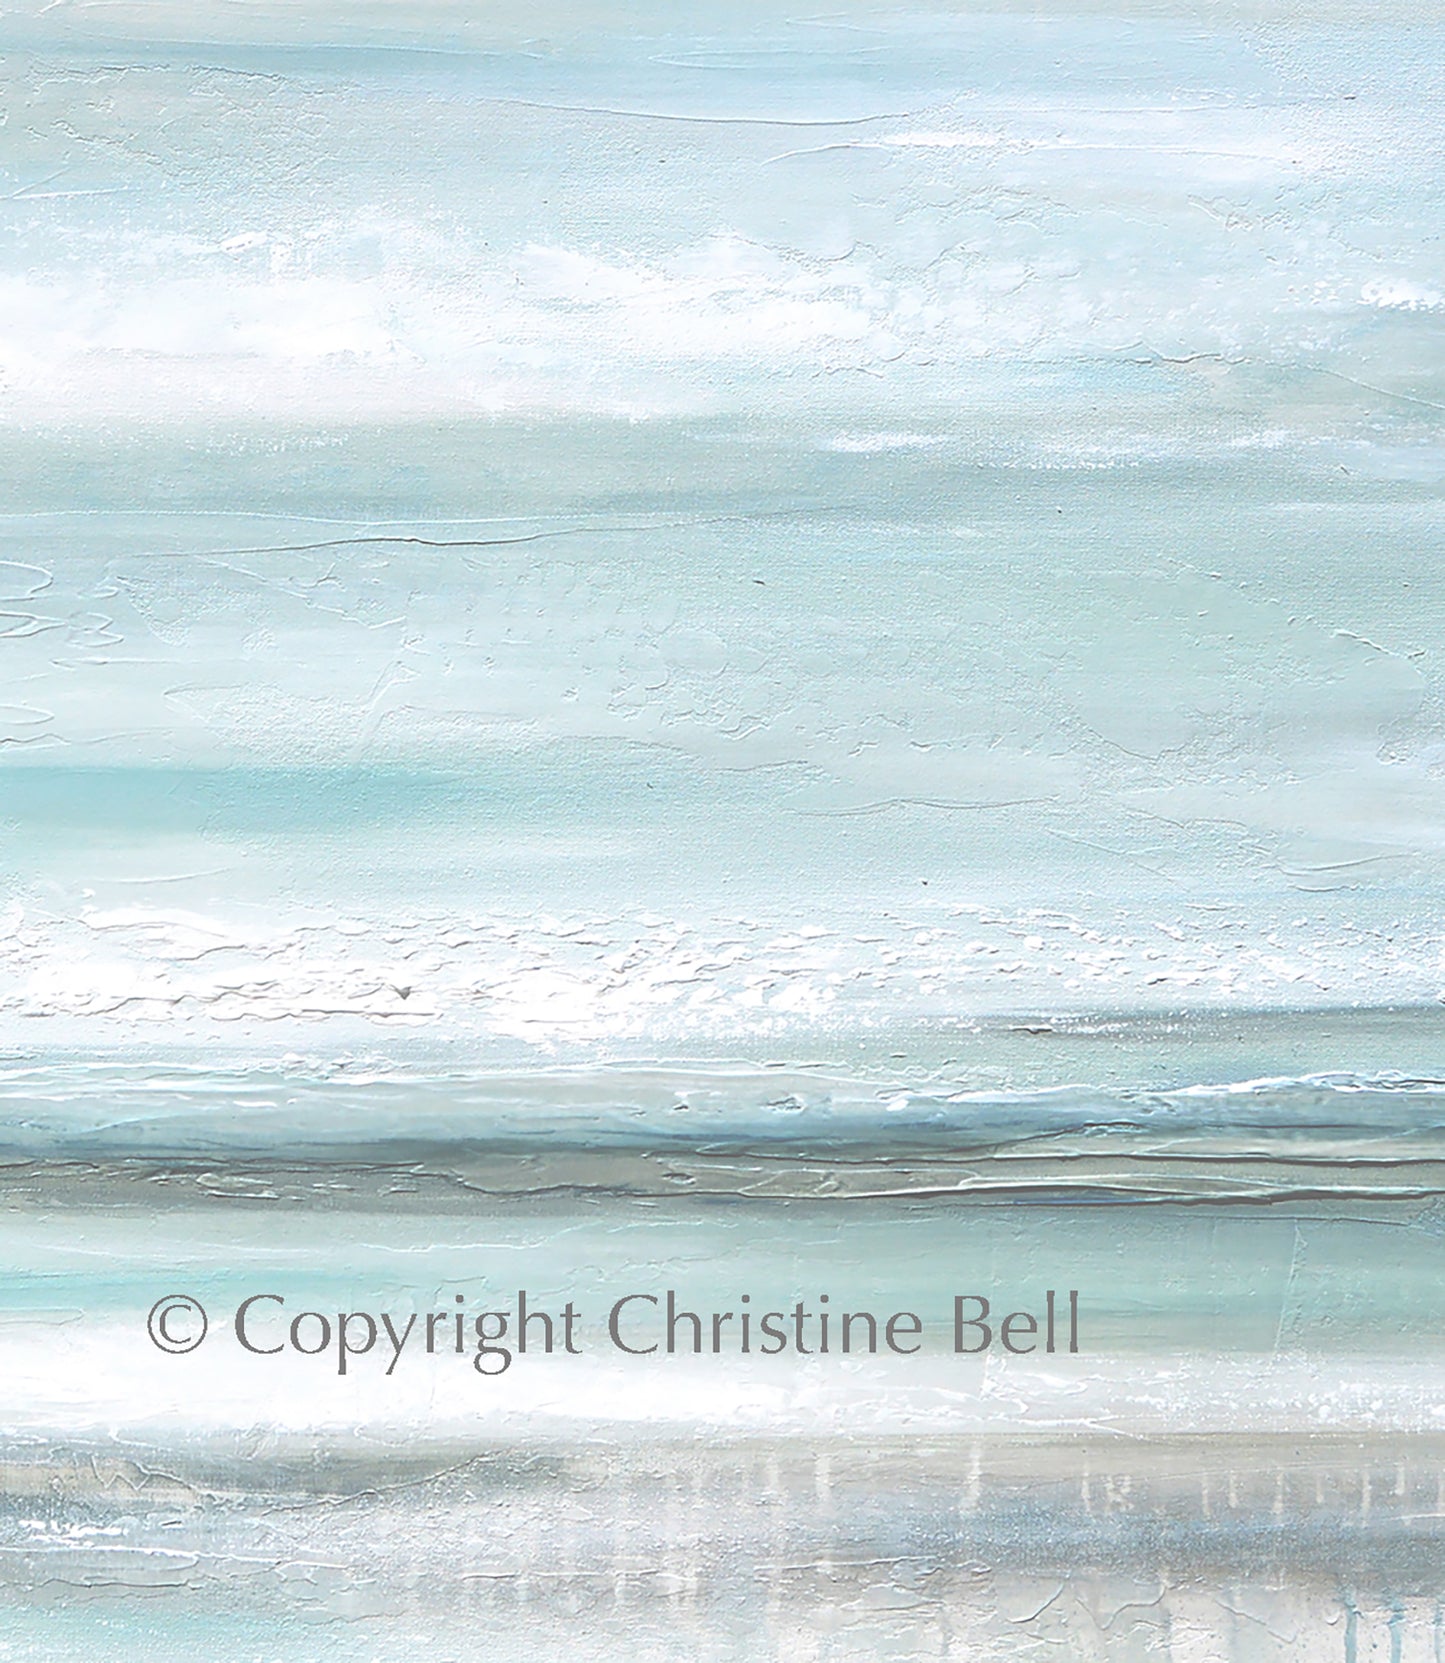 "Euphoria" GICLEE PRINT Coastal Abstract Painting, Seafoam Green Light Blue, Grey, White